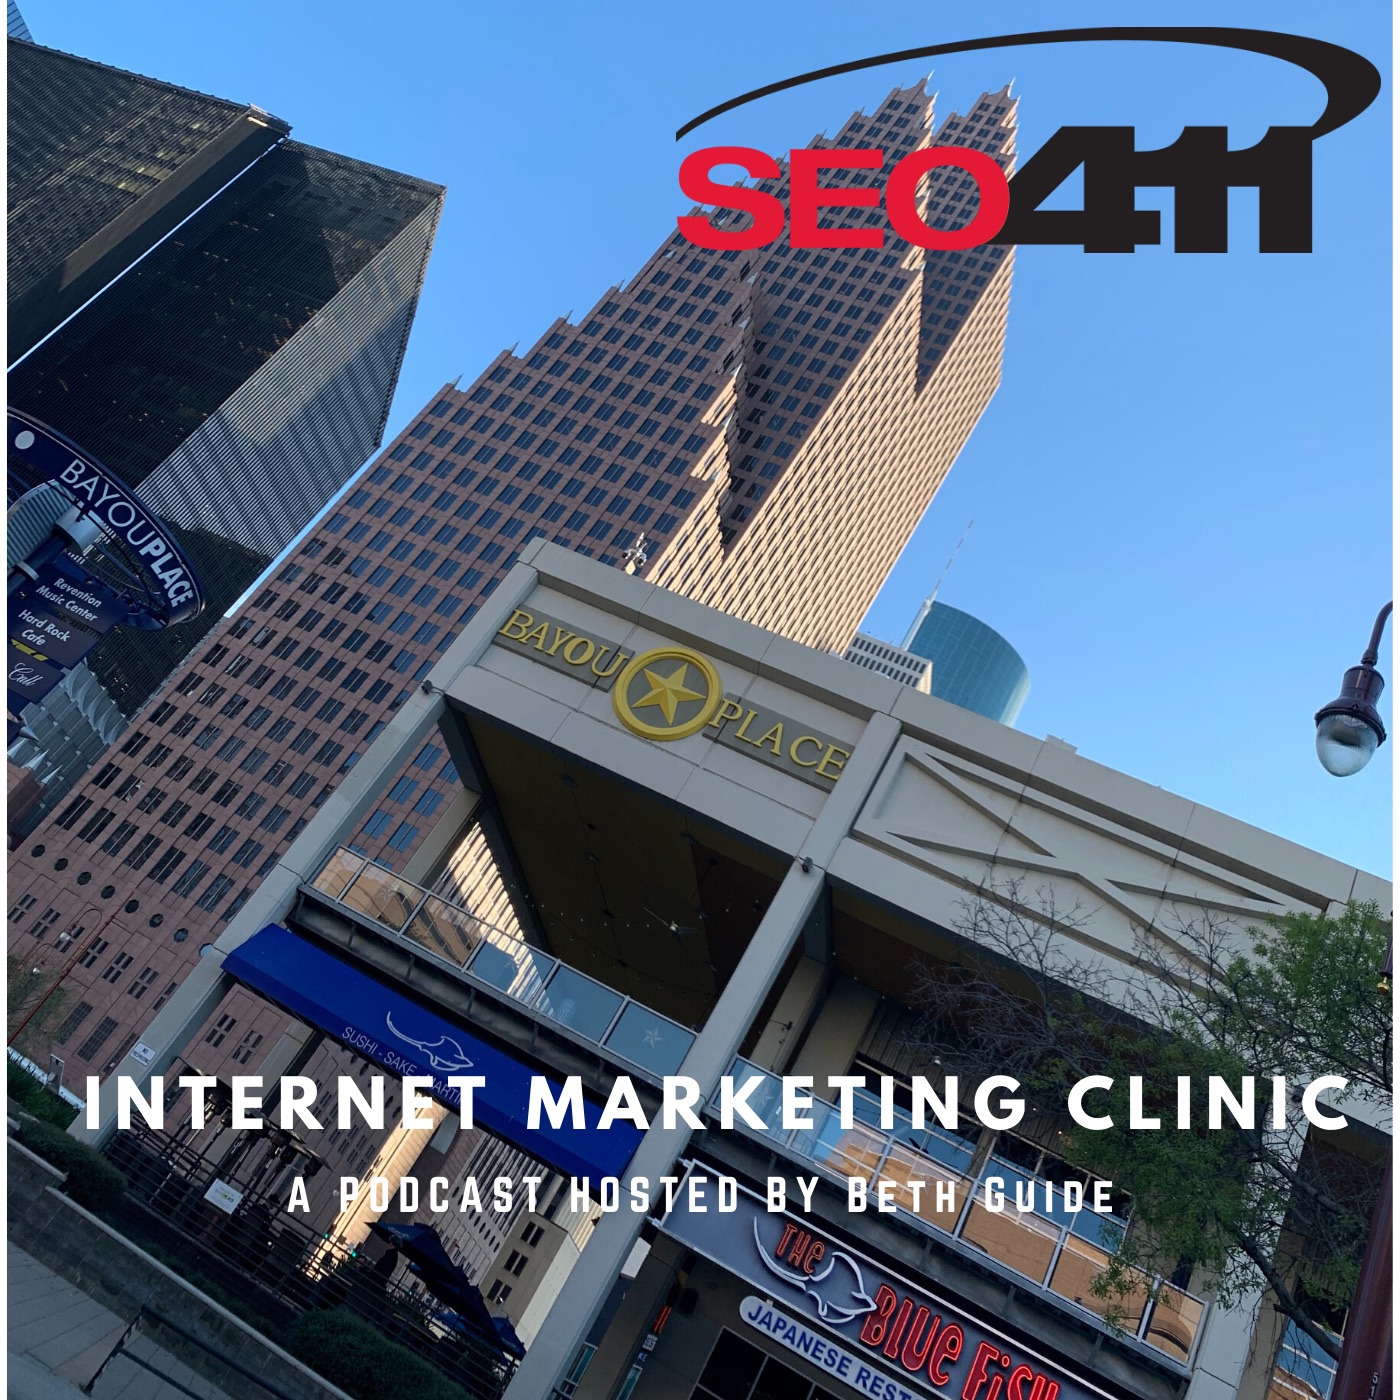 SEO411 Internet Marketing Clinic